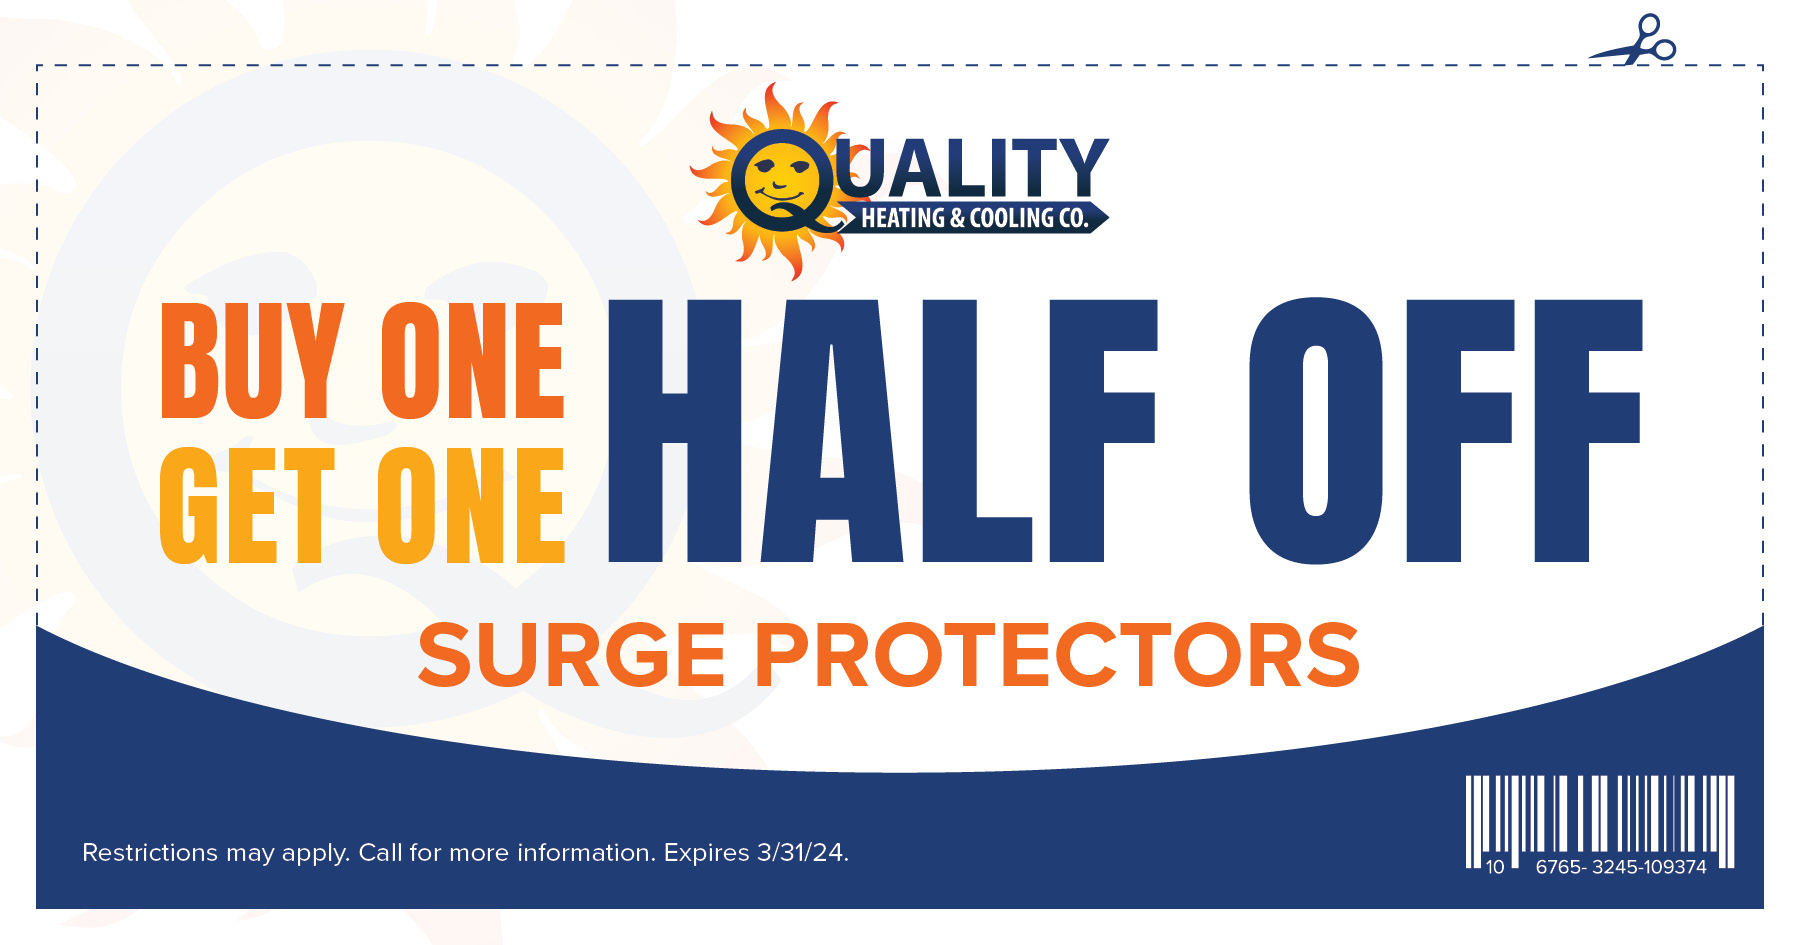 buy one get one half off surge protectors!